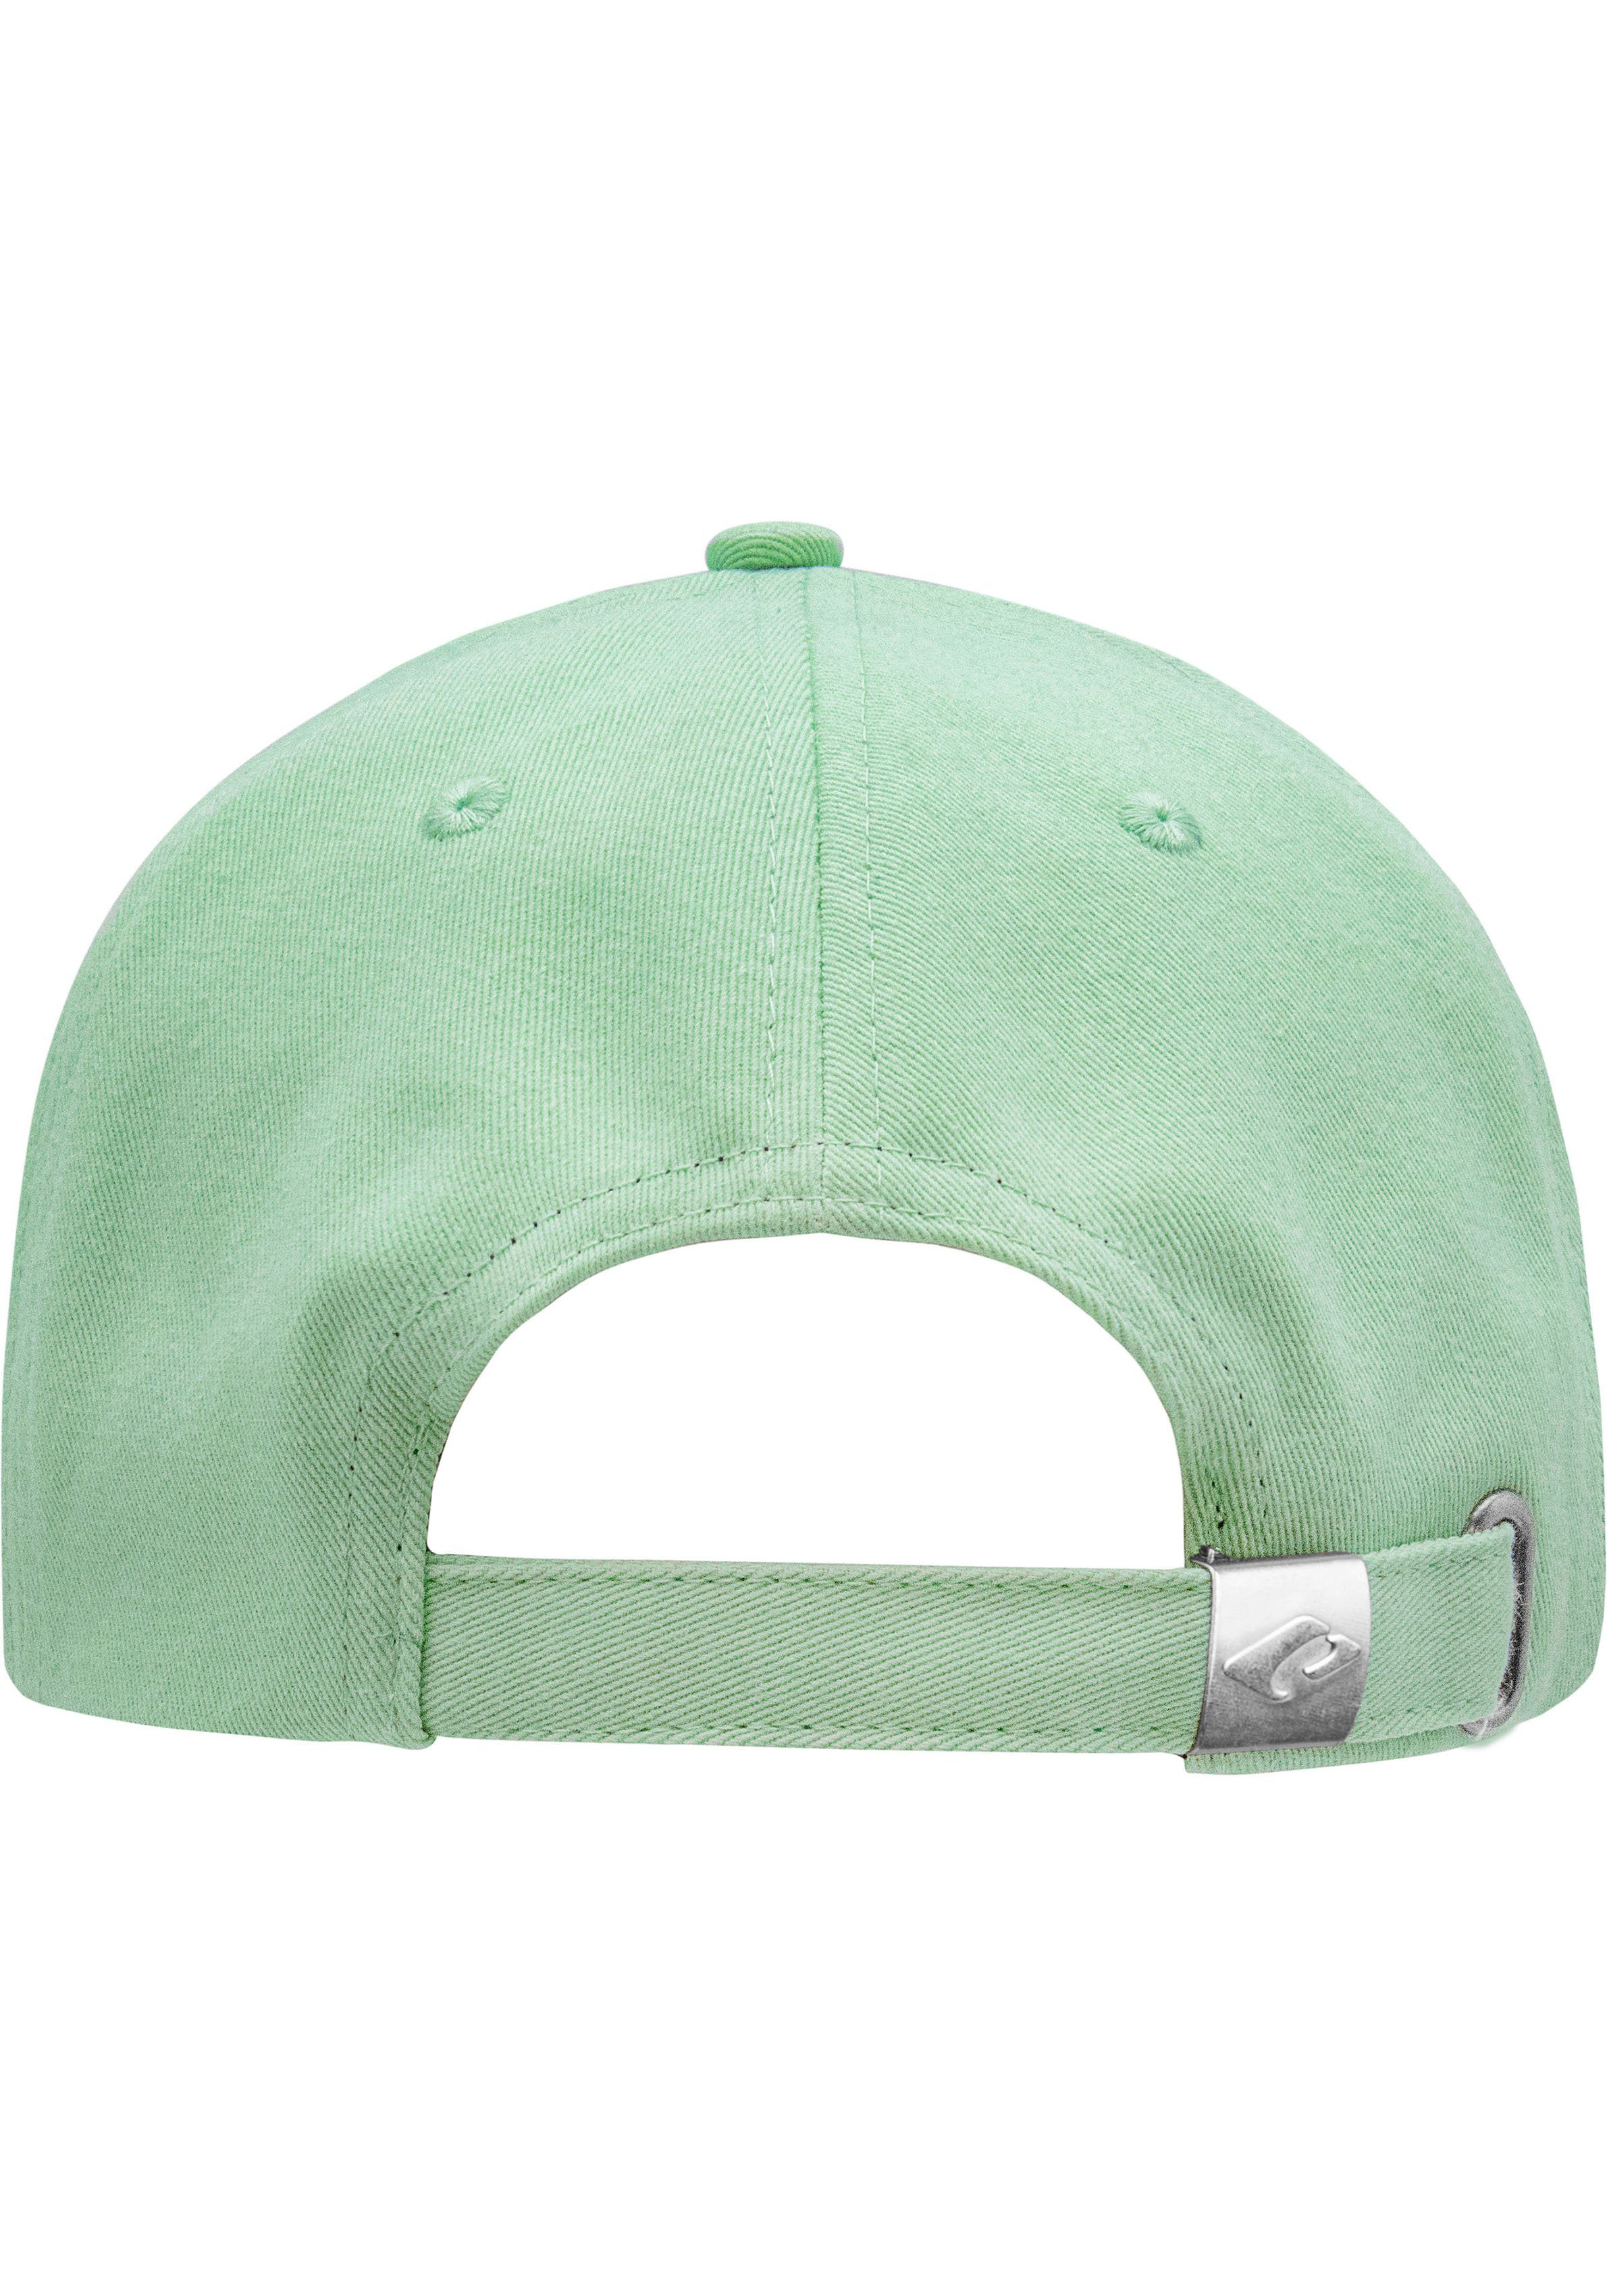 chillouts Baseball Cap mint Arklow Hat